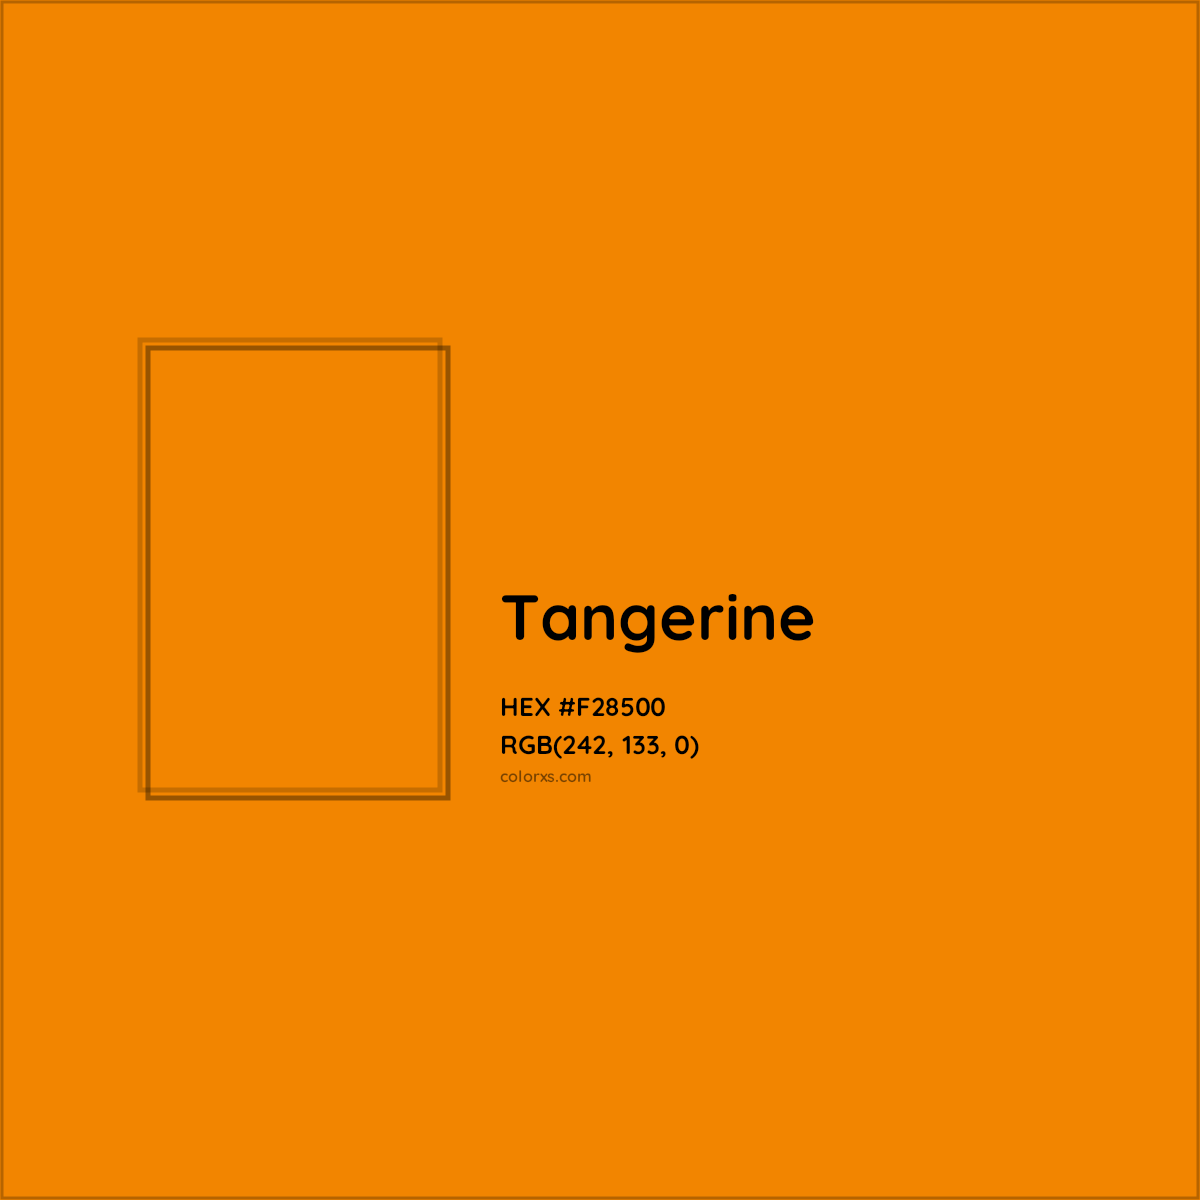 HEX #F28500 Tangerine Color - Color Code